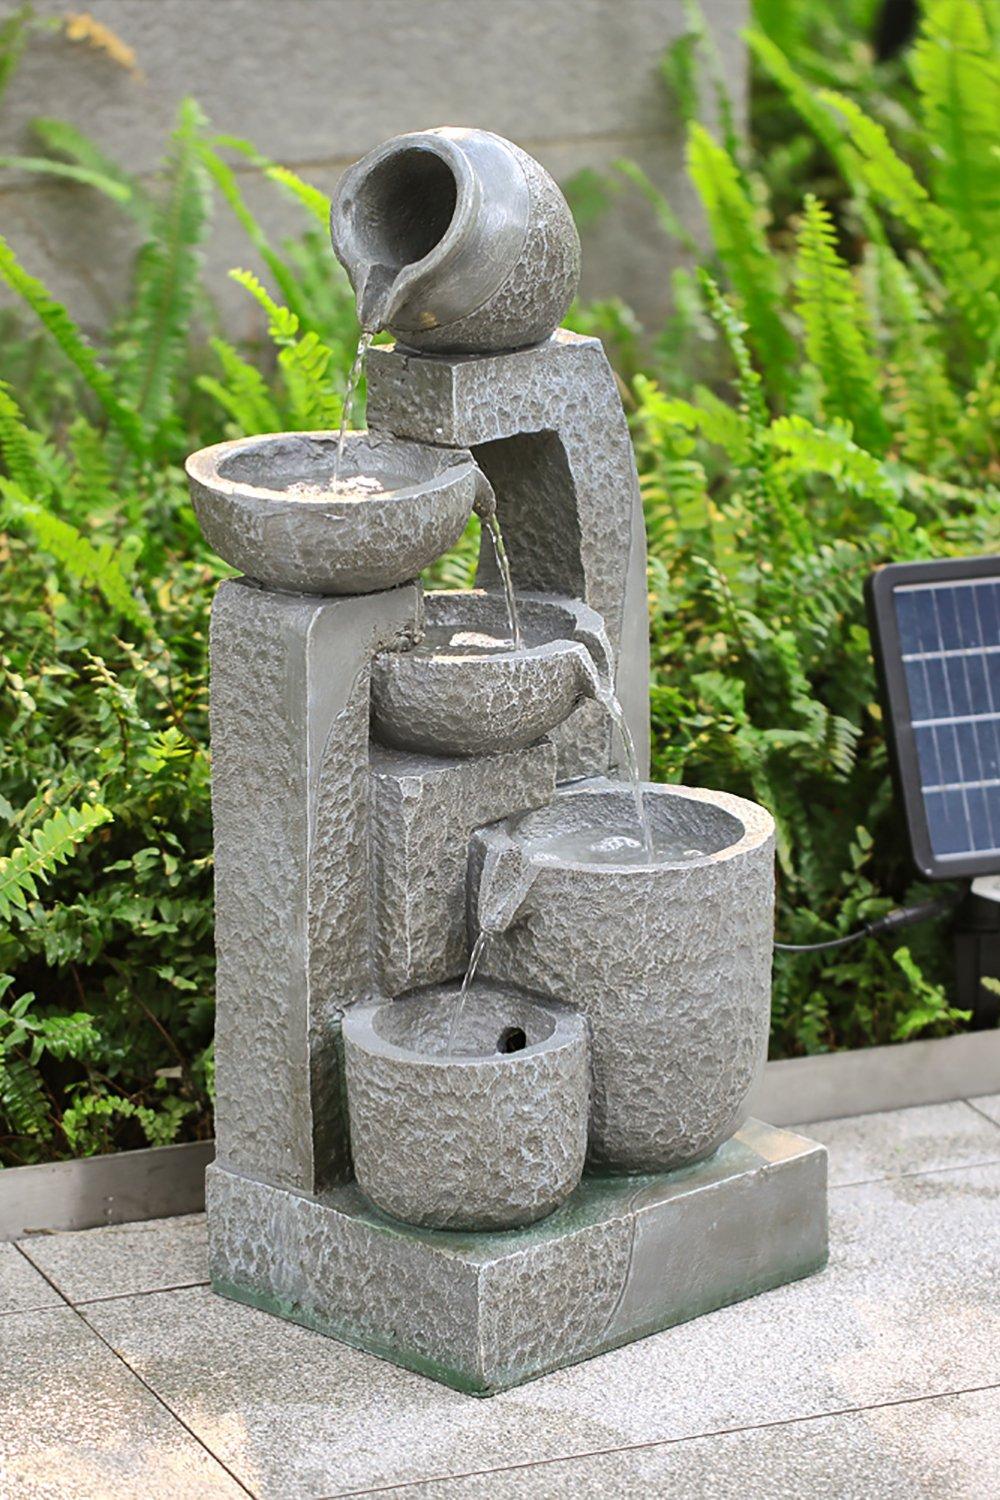 Solar-powered Water Fountain for Outdoors & Garden